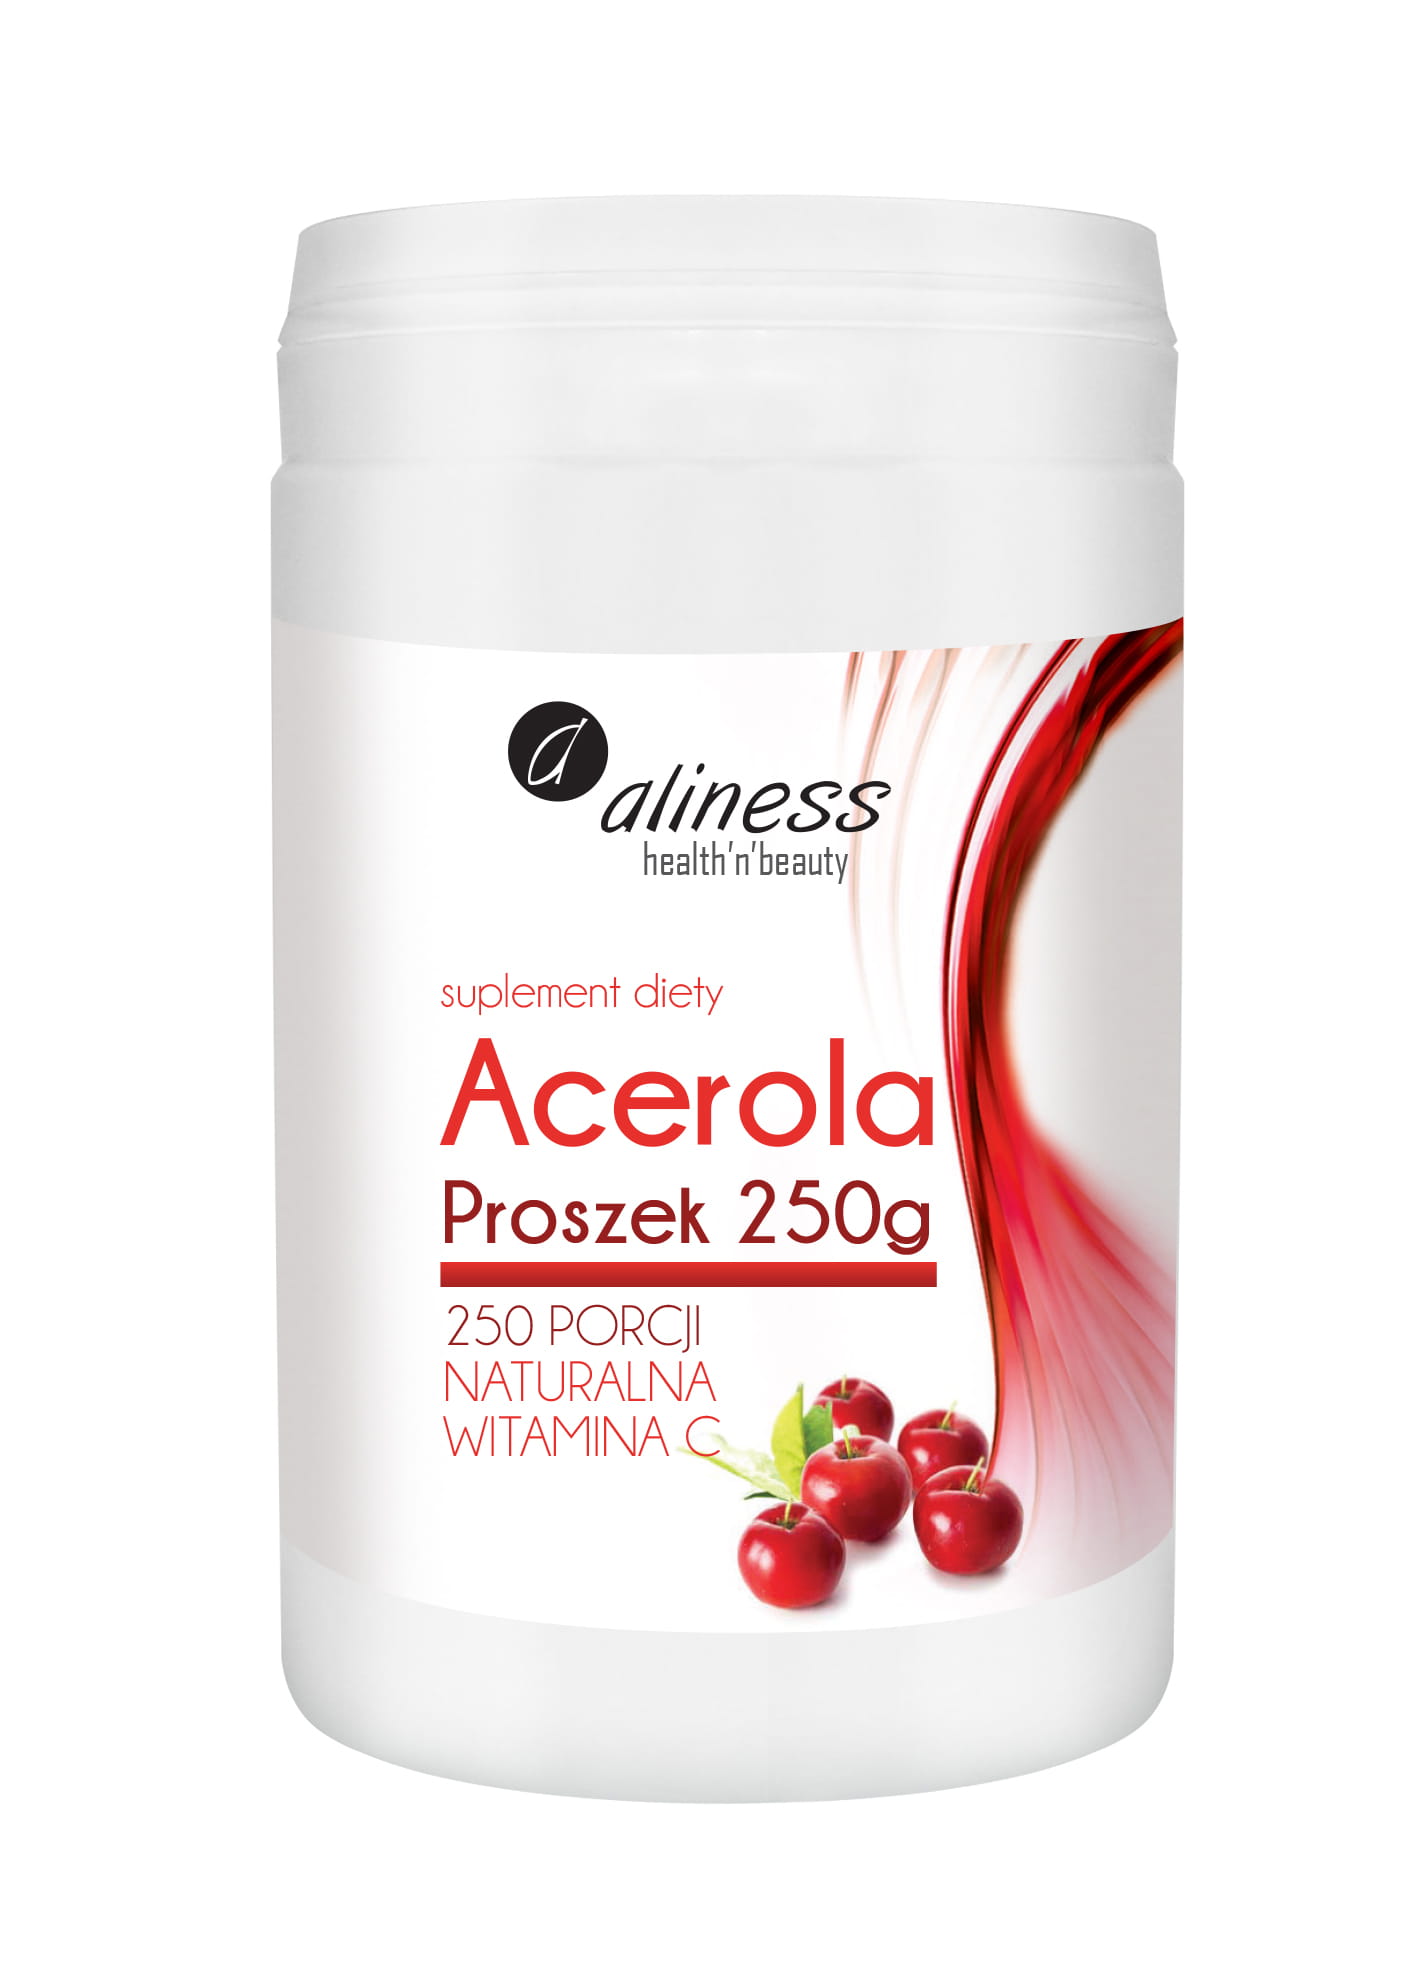 Acerola Proszek 250 g- naturalna witamina C Aliness